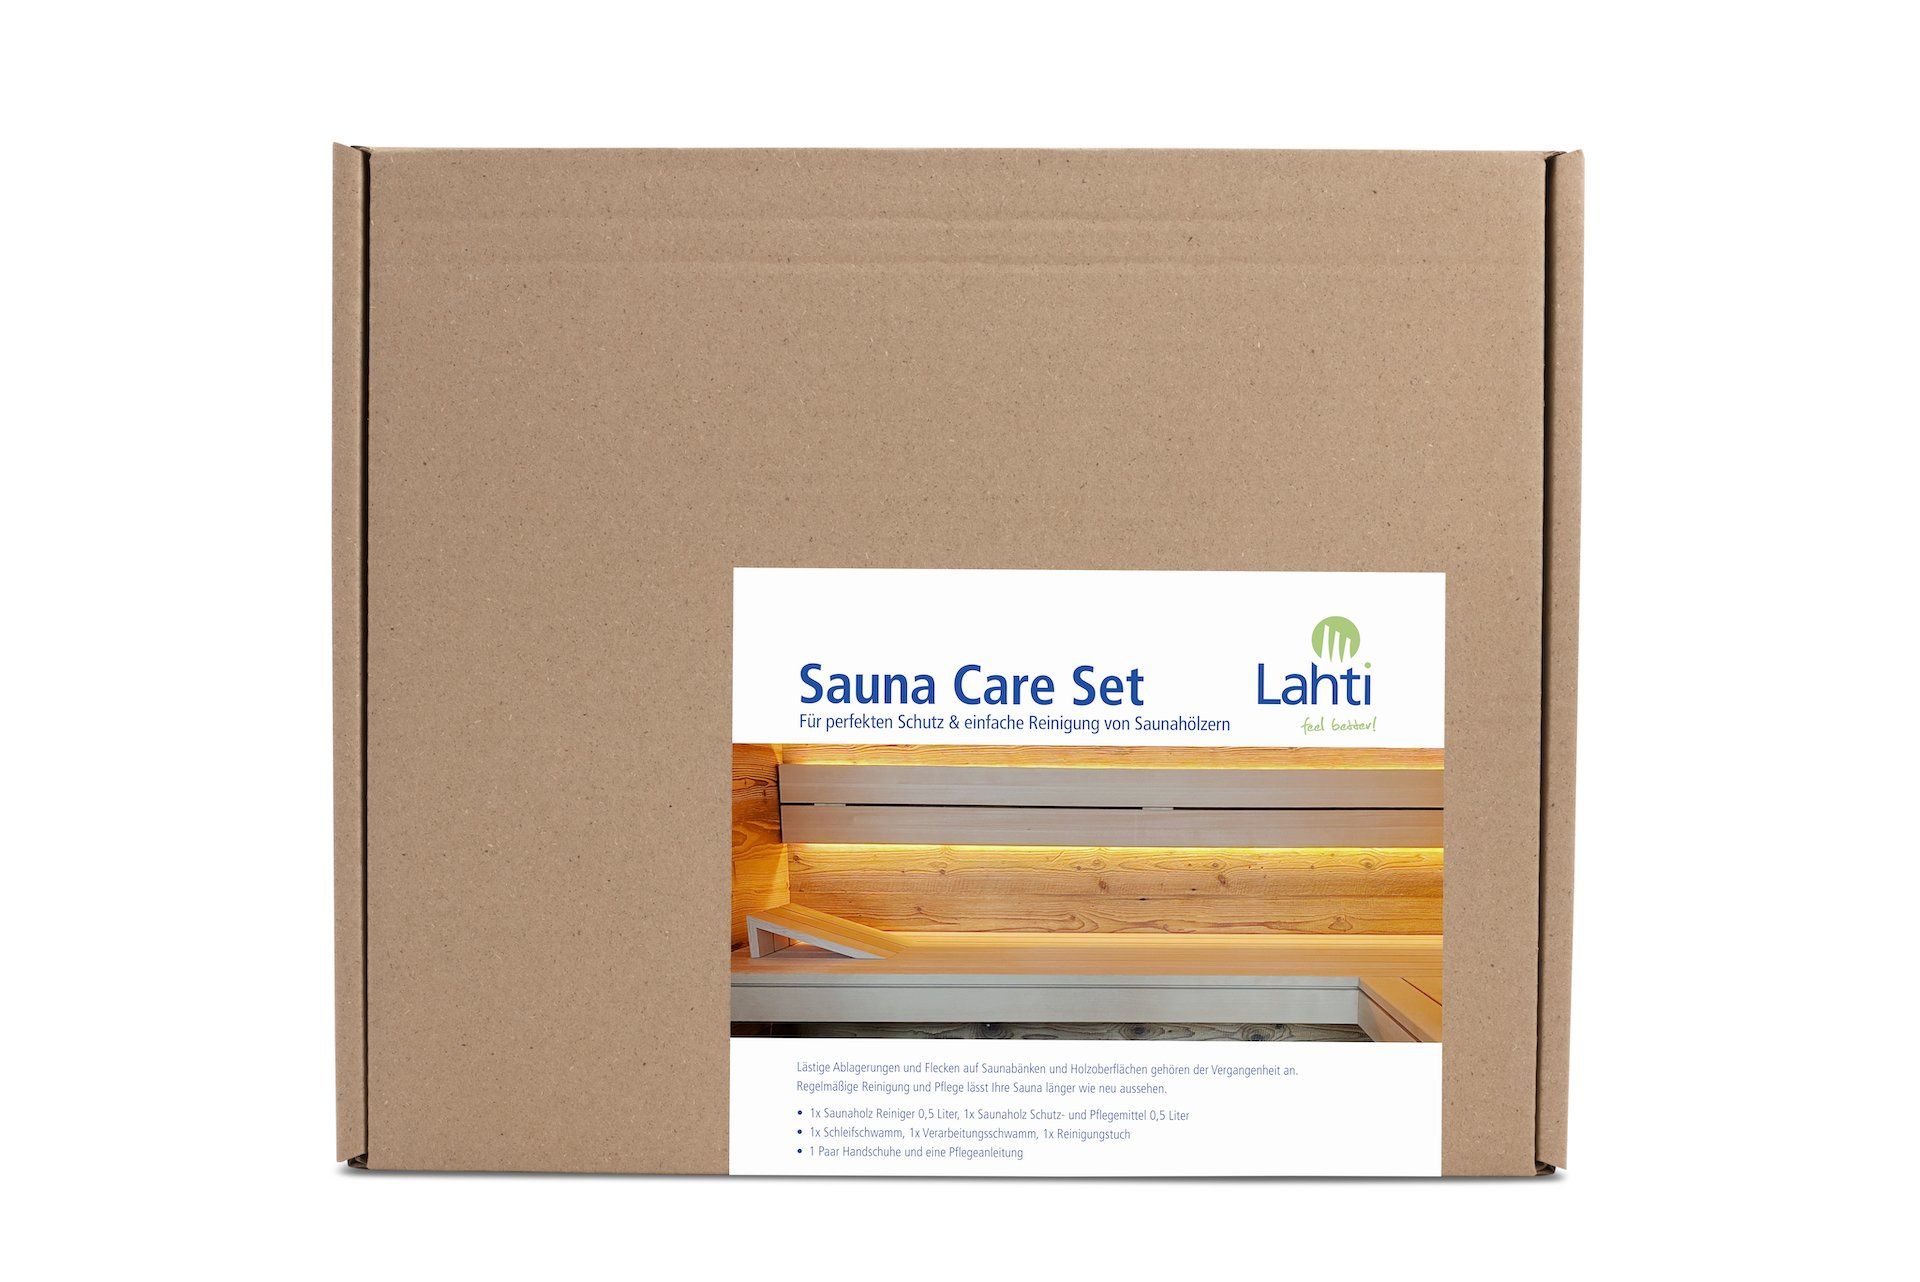 Sauna Care Set – Lahti – feel better!